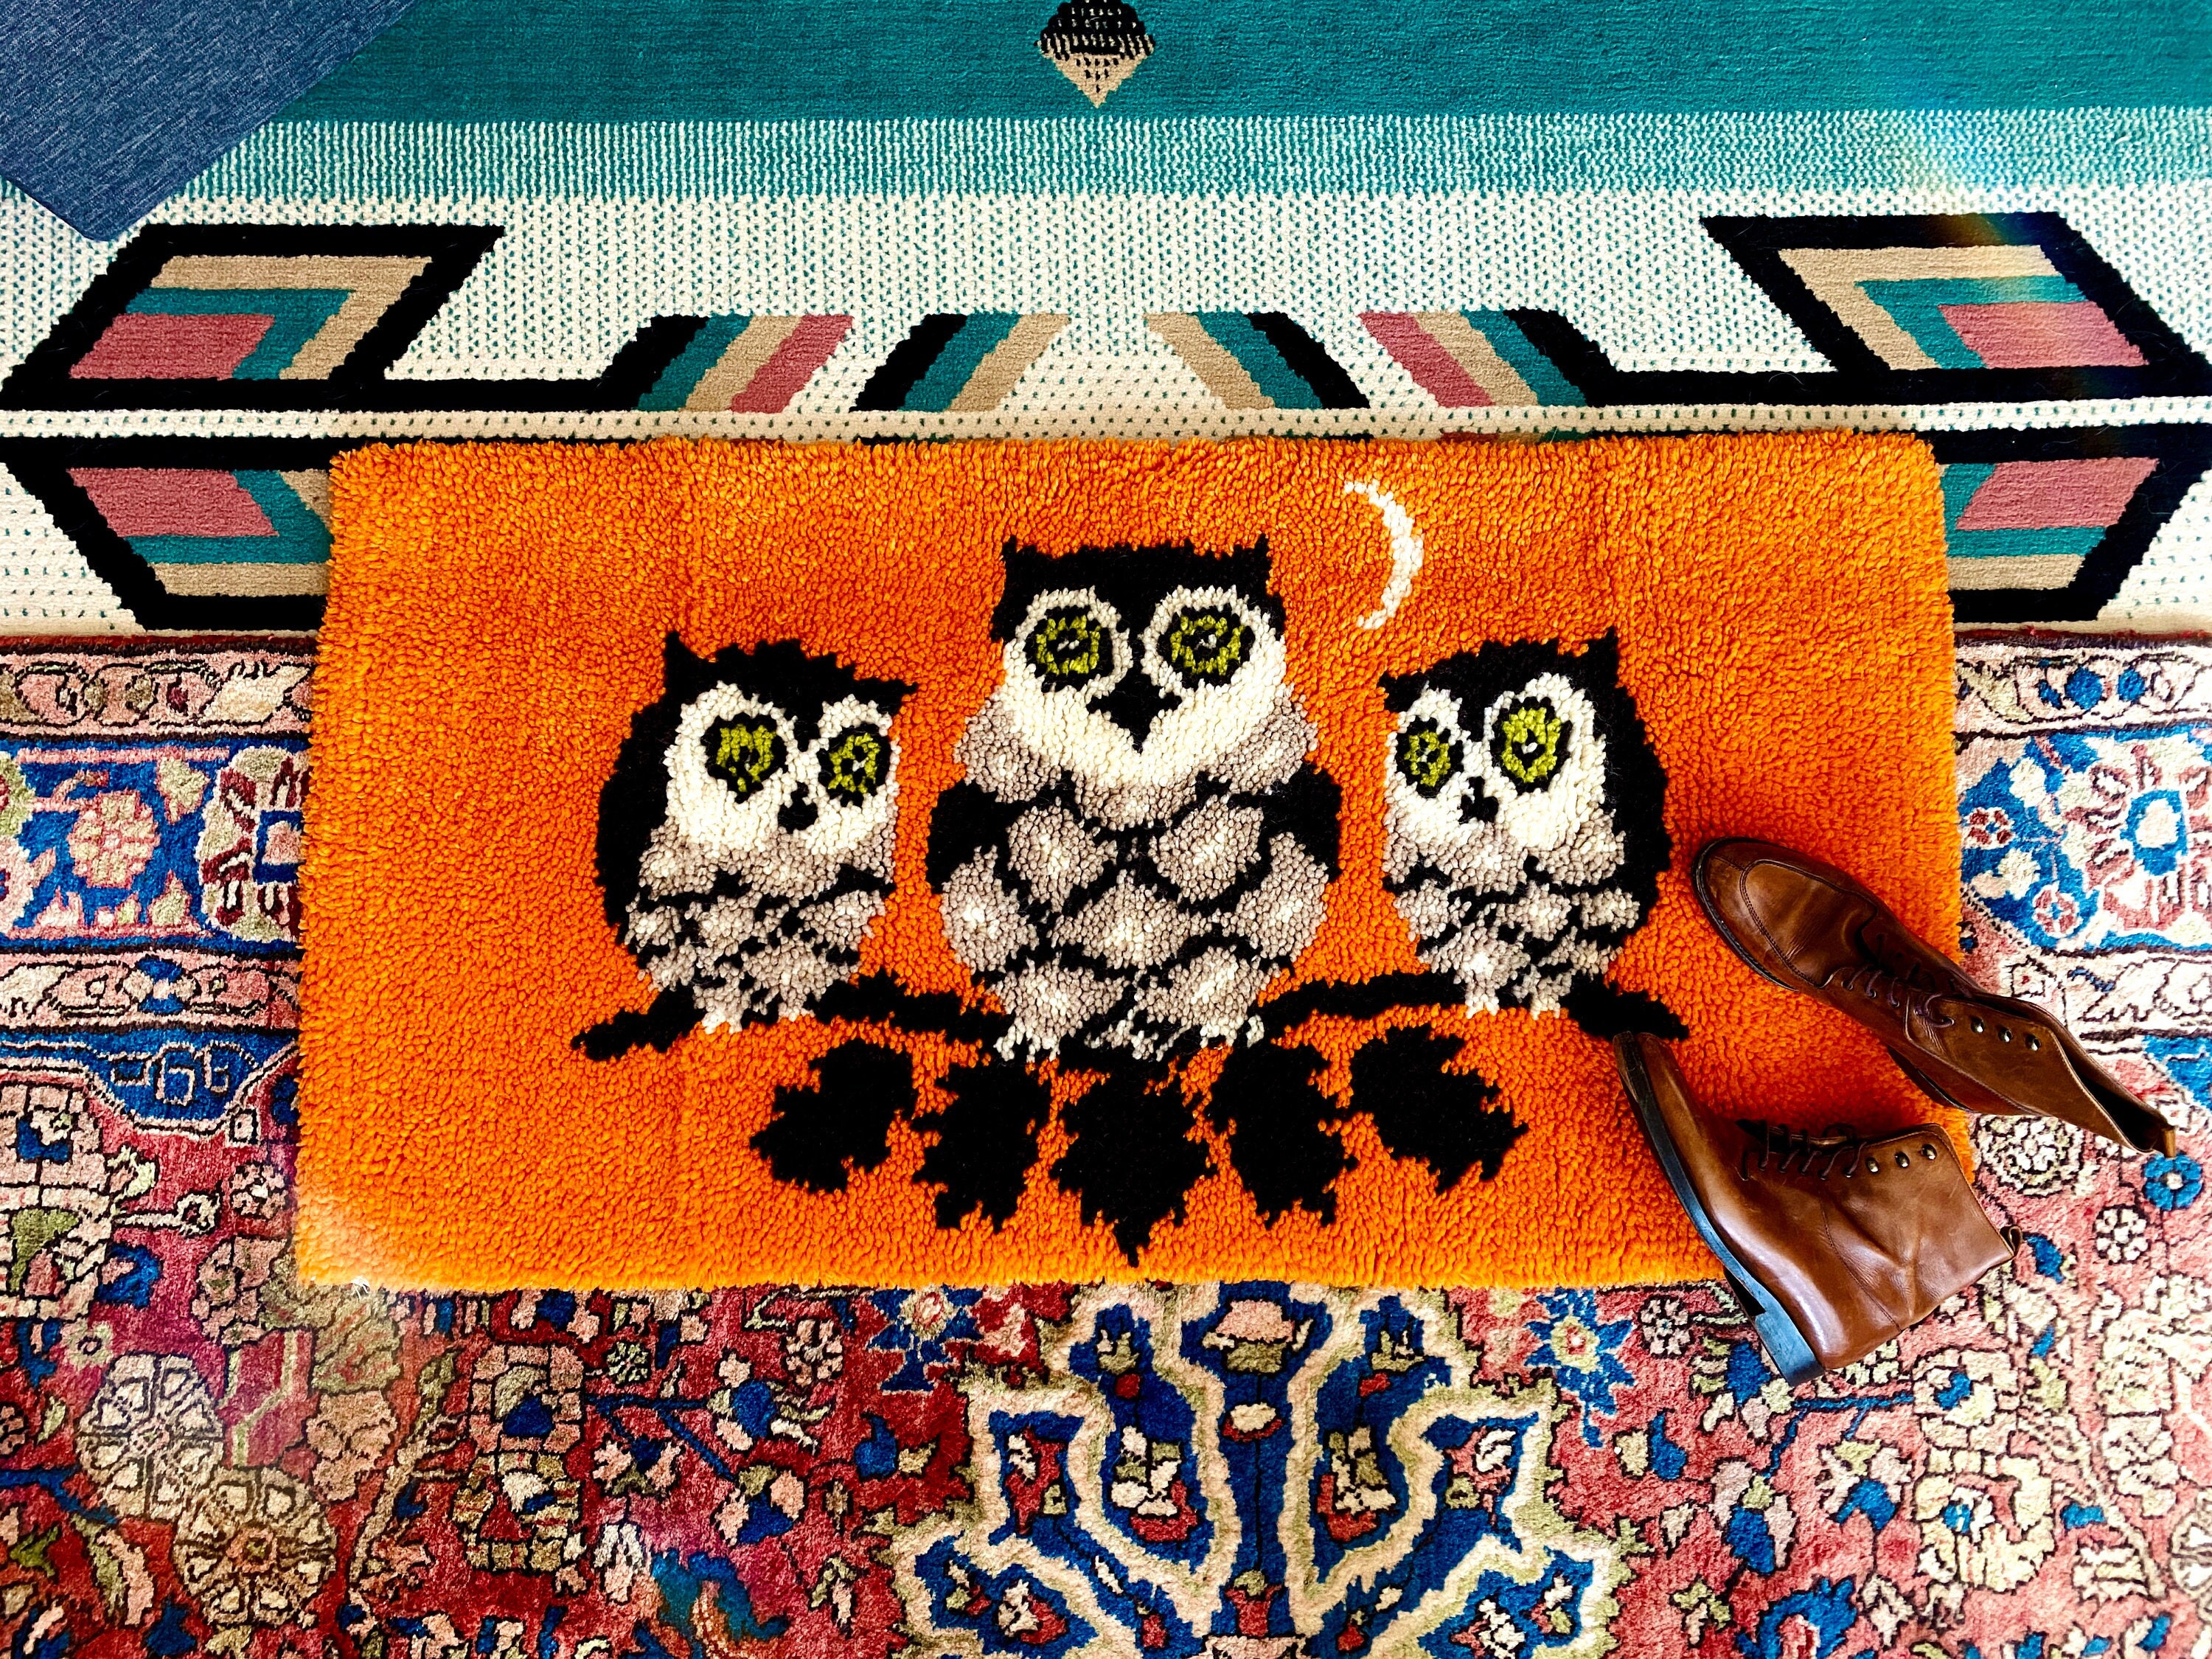 1970s Owl Rug, Shillcraft Latch Hook Rug, Retro Owl Tapestry, Boho Decor, Orange Rug, Made in Canada